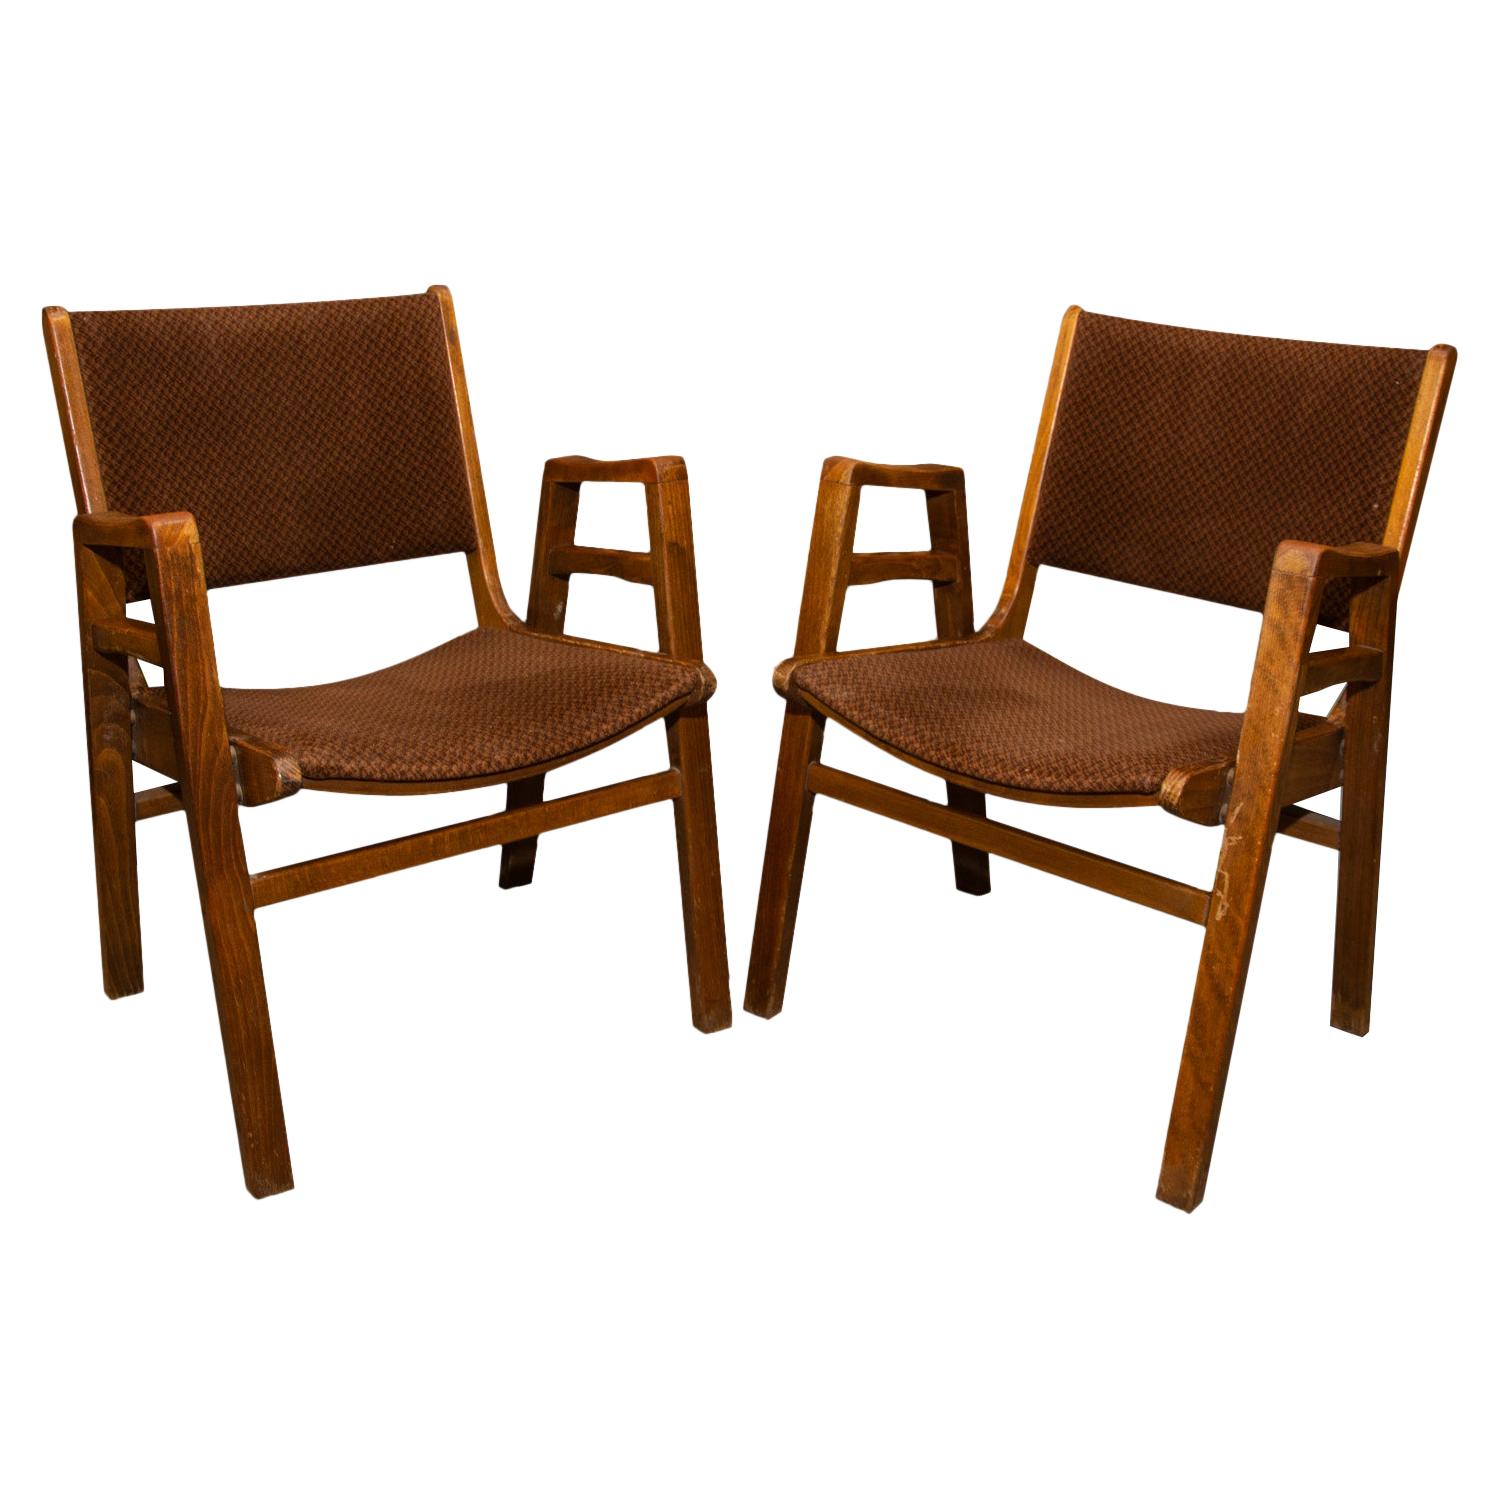 Pair of Midcentury Chairs by František Jirák, Czechoslovakia